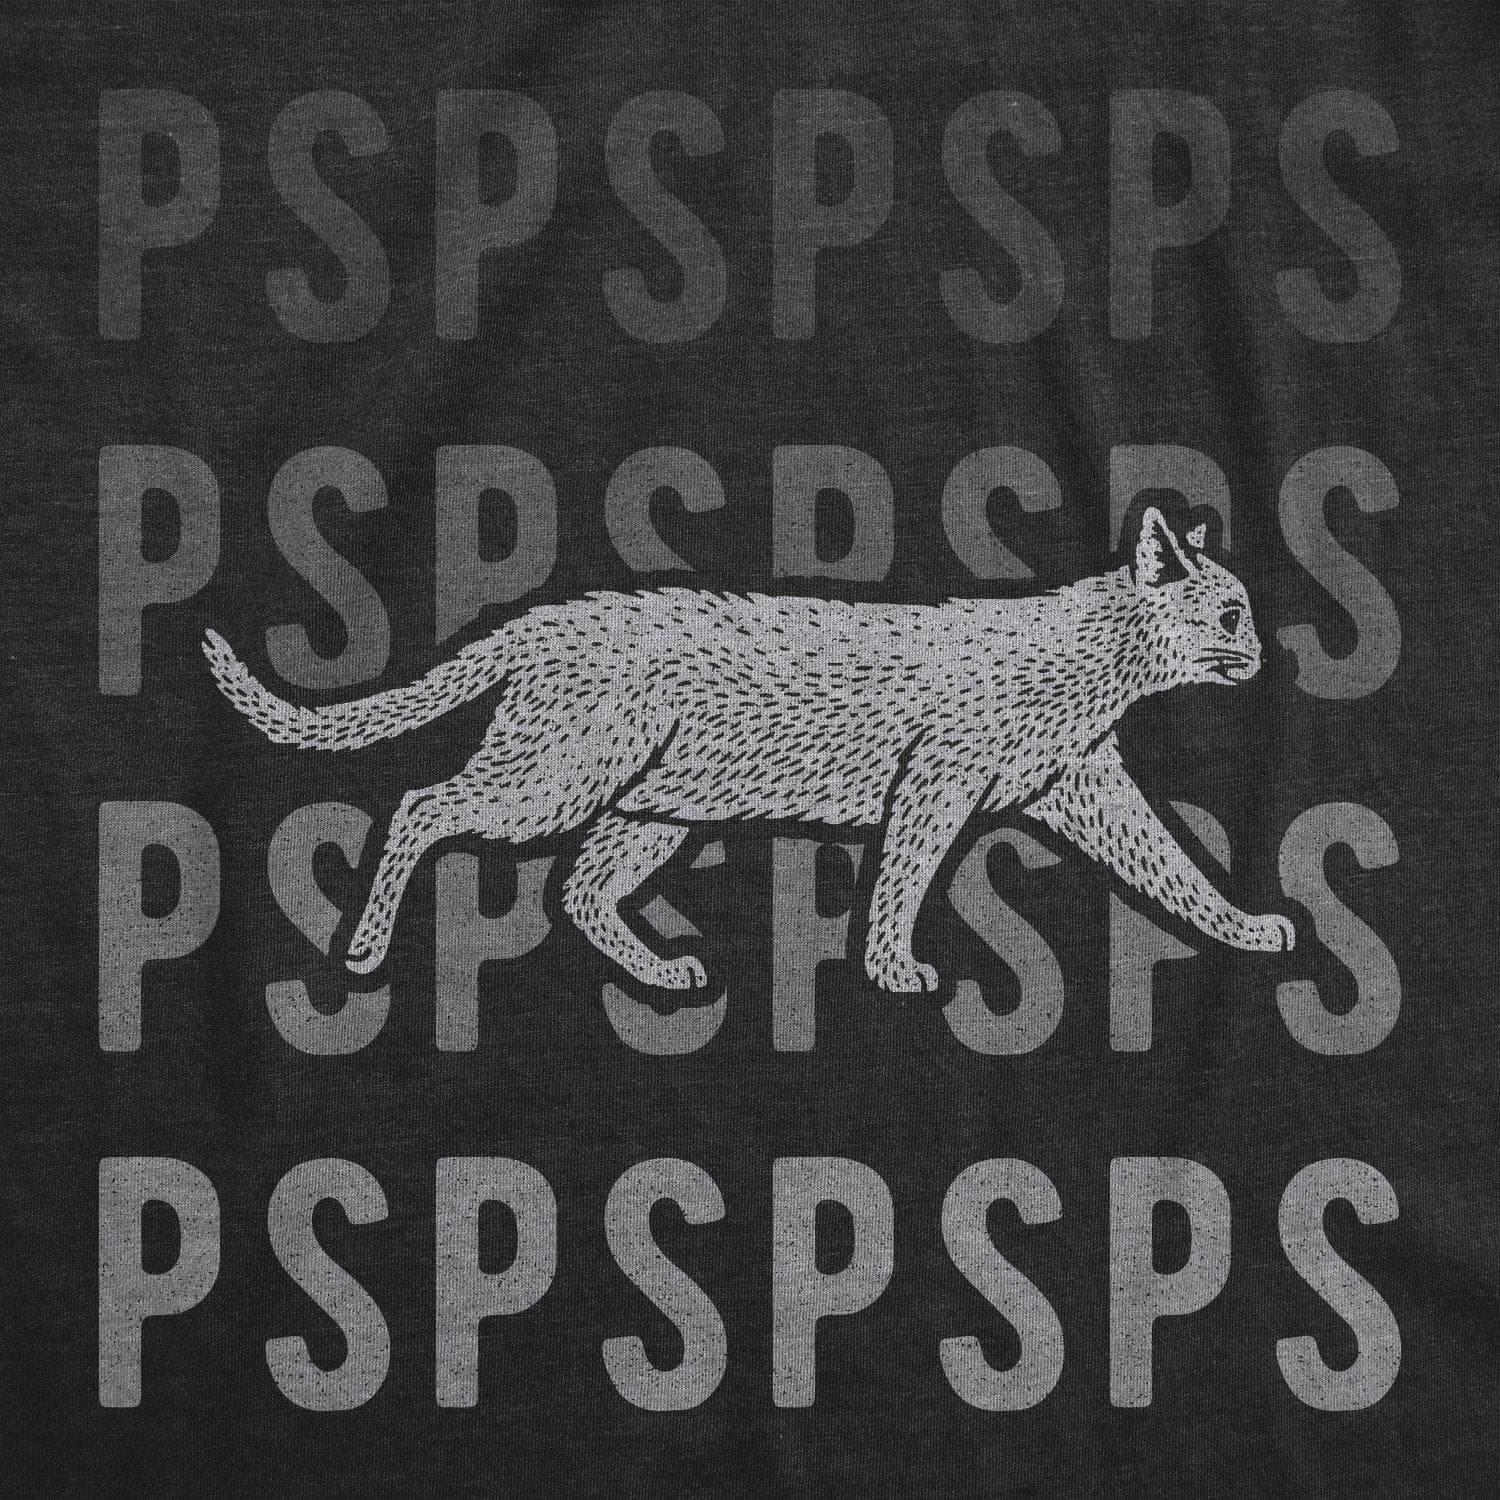 Pspspsps Women's Tshirt - Crazy Dog T-Shirts